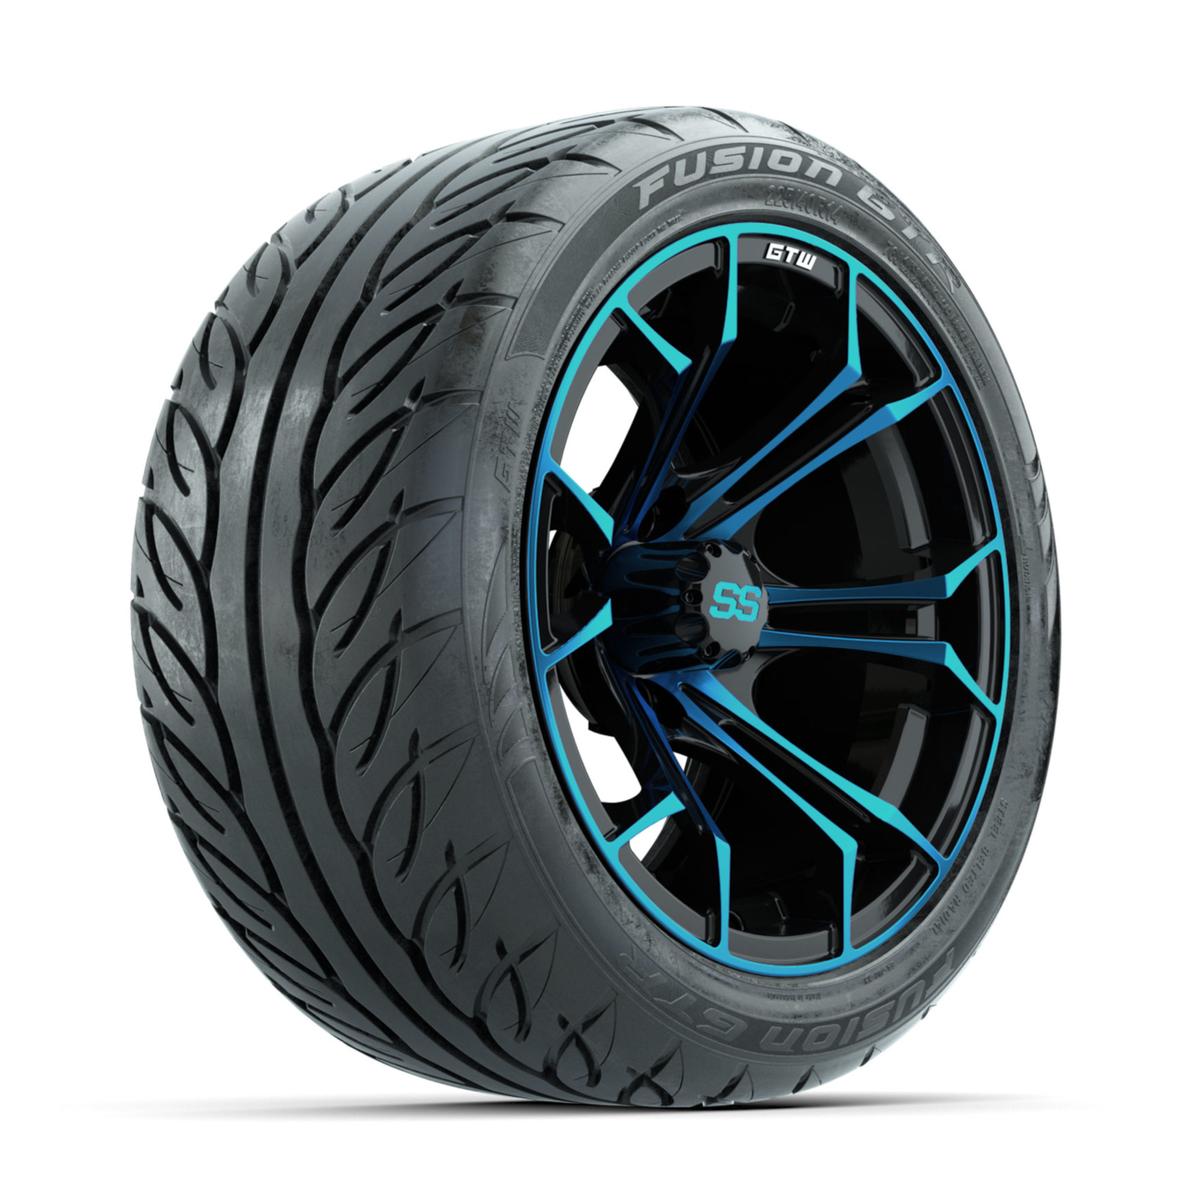 GTW Spyder Blue/Black 14 in Wheels with 225/40-R14 Fusion GTR Street Tires – Full Set